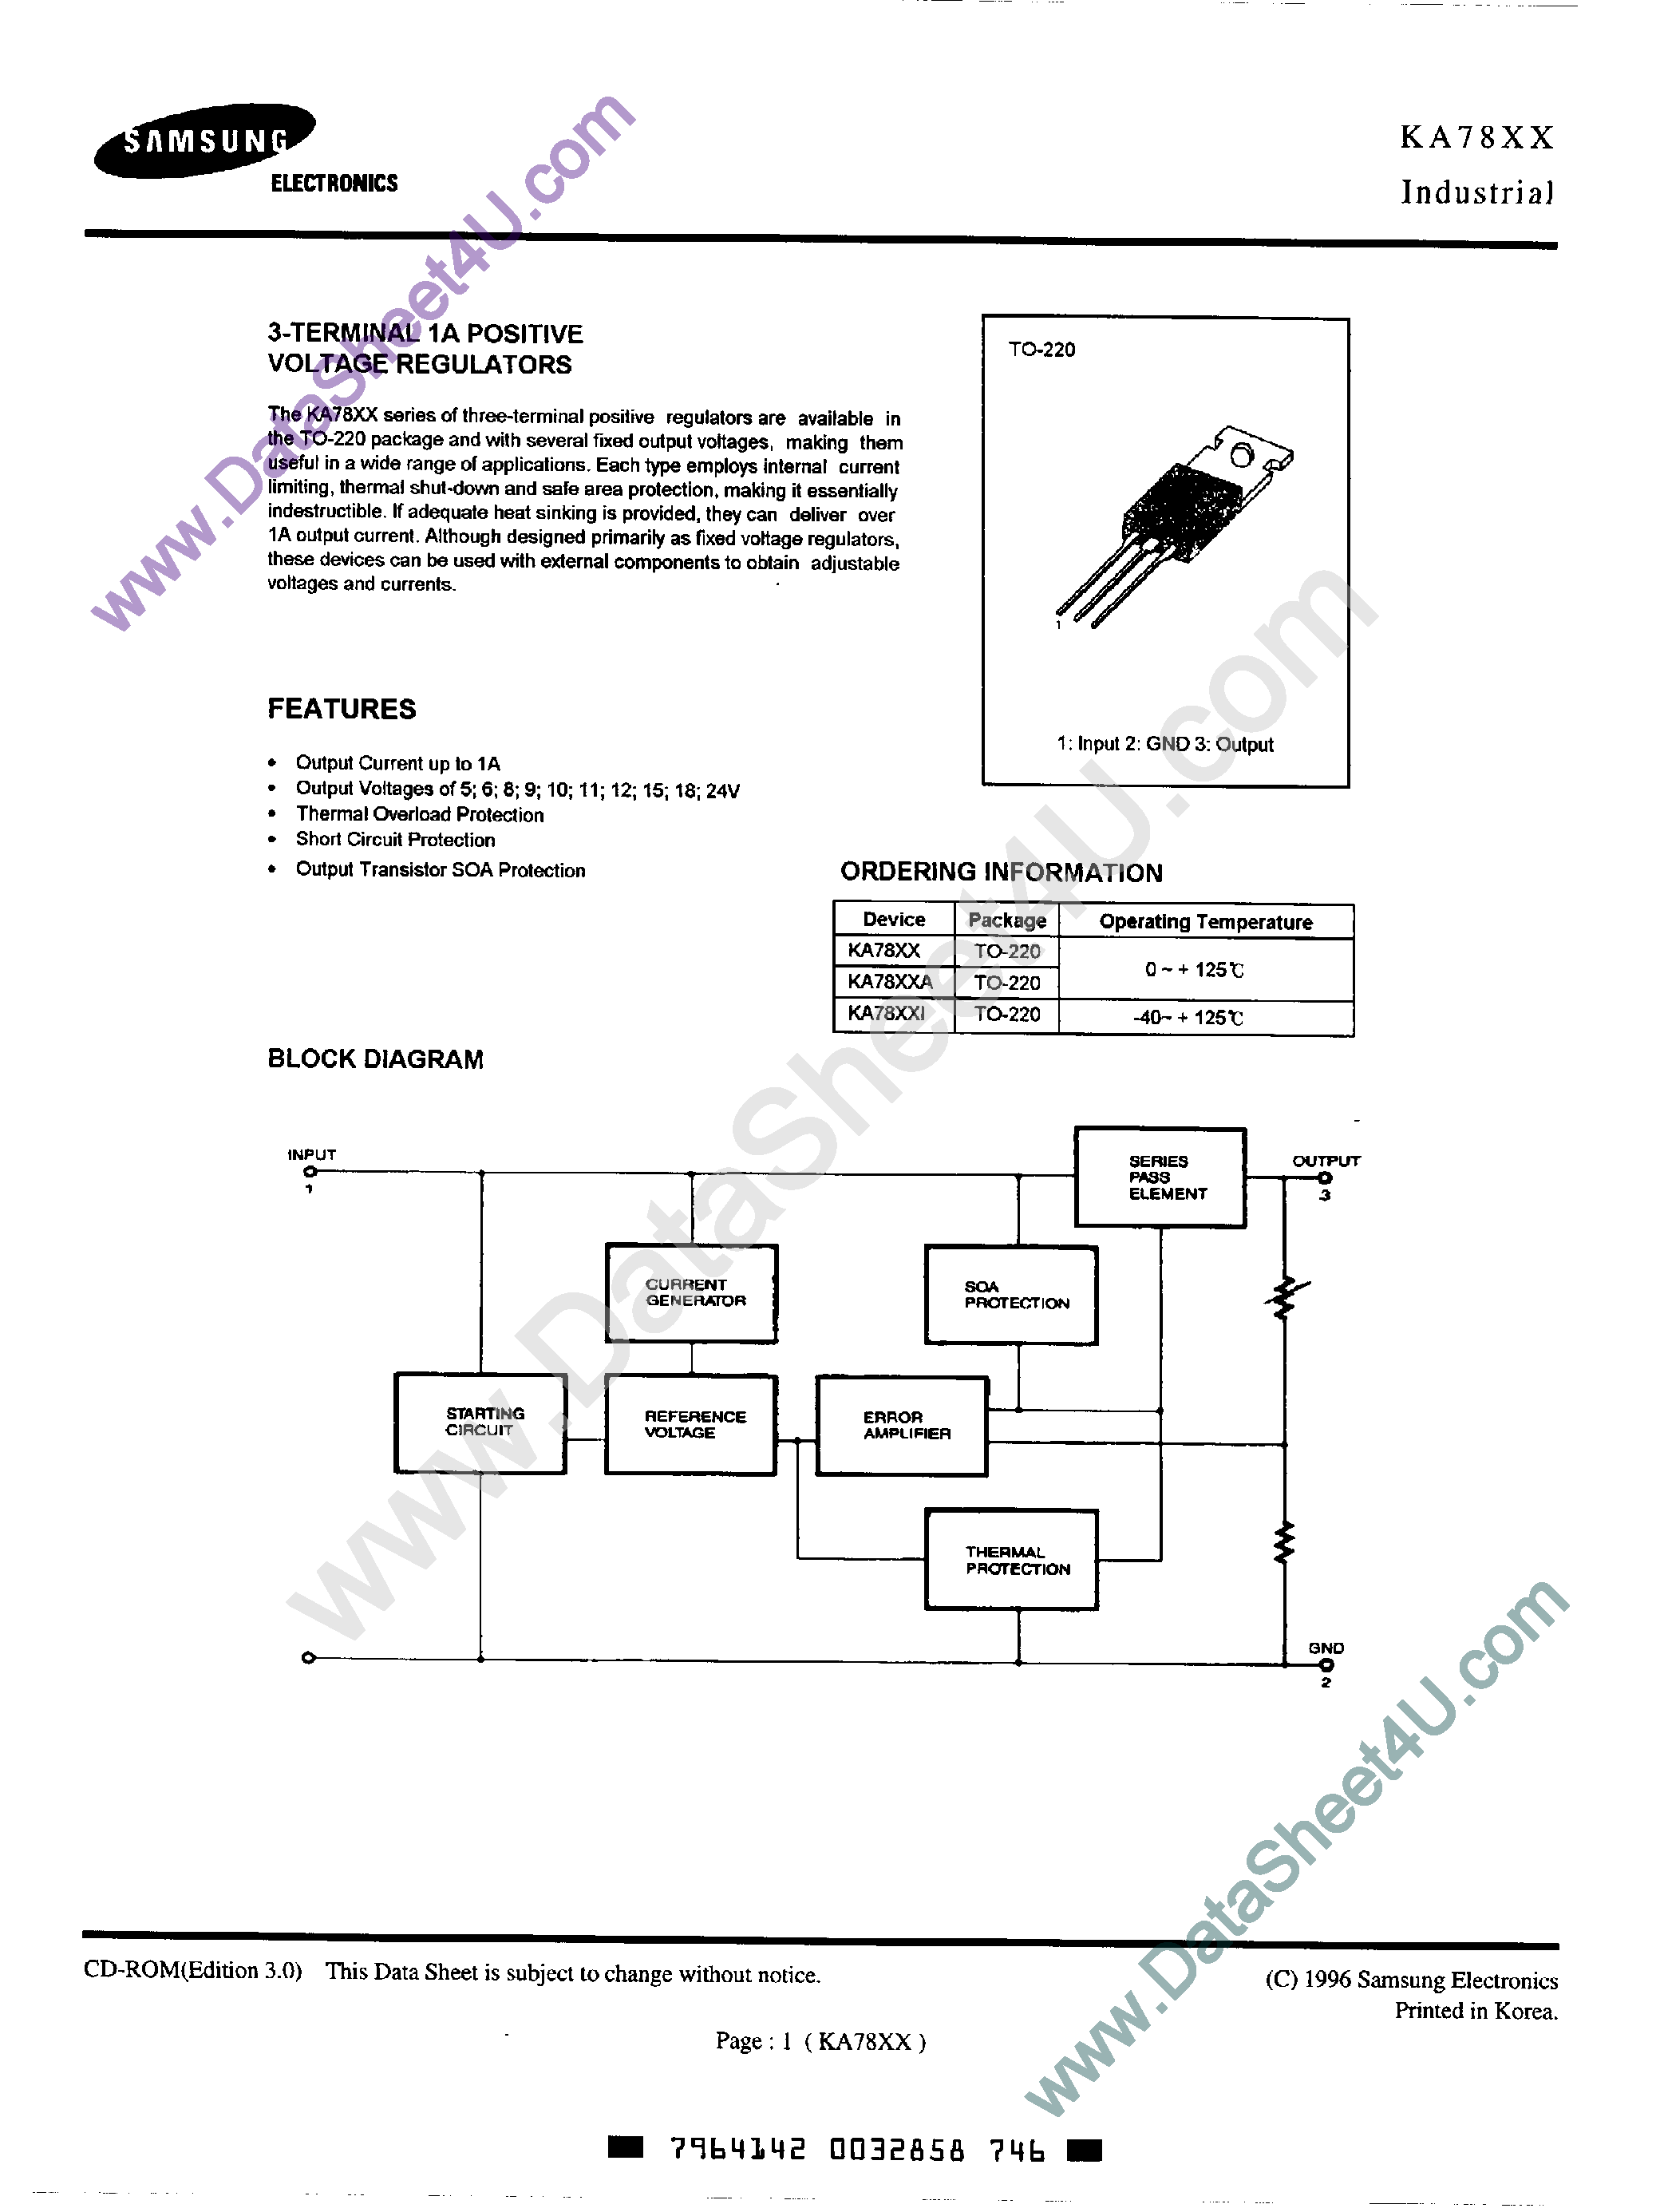 Даташит KA7805 - (KA78xx) 3-Teminal 1A Positive Voltage Regulators страница 1